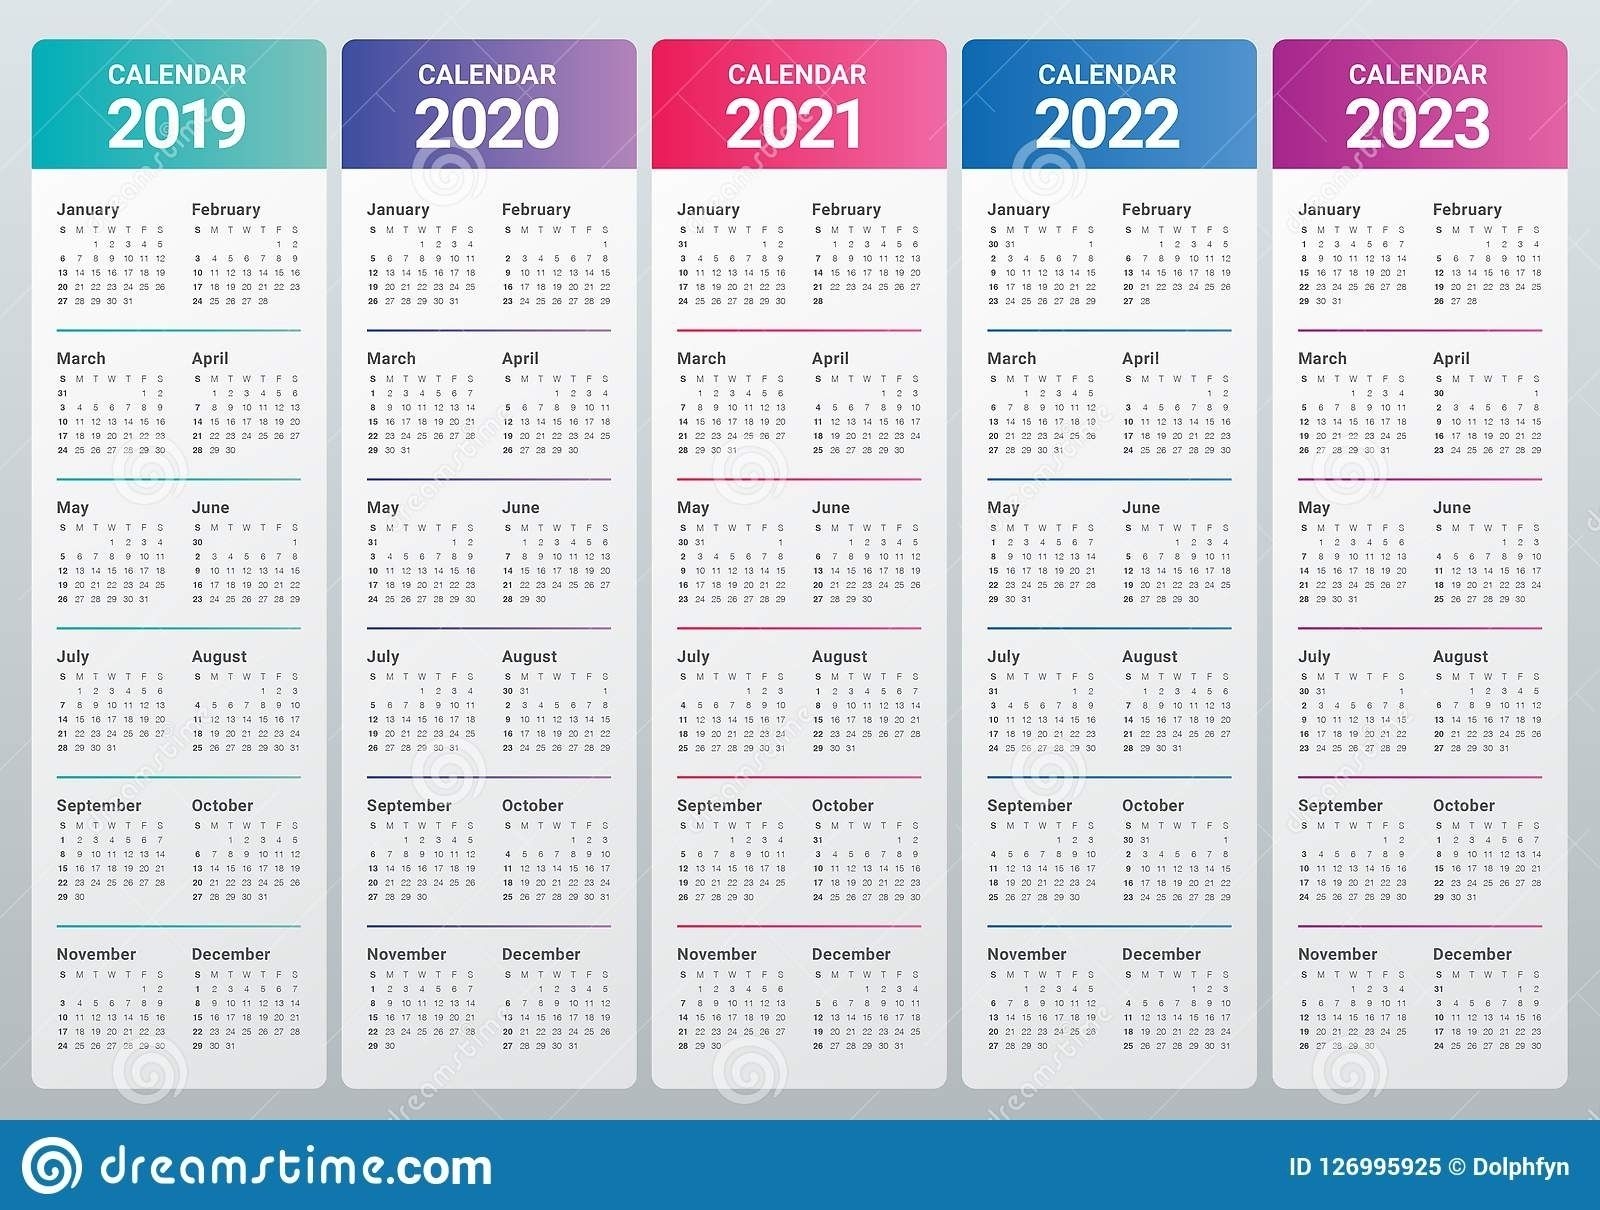 Free Prinable Calenders 2020 To 2023 - Calendar